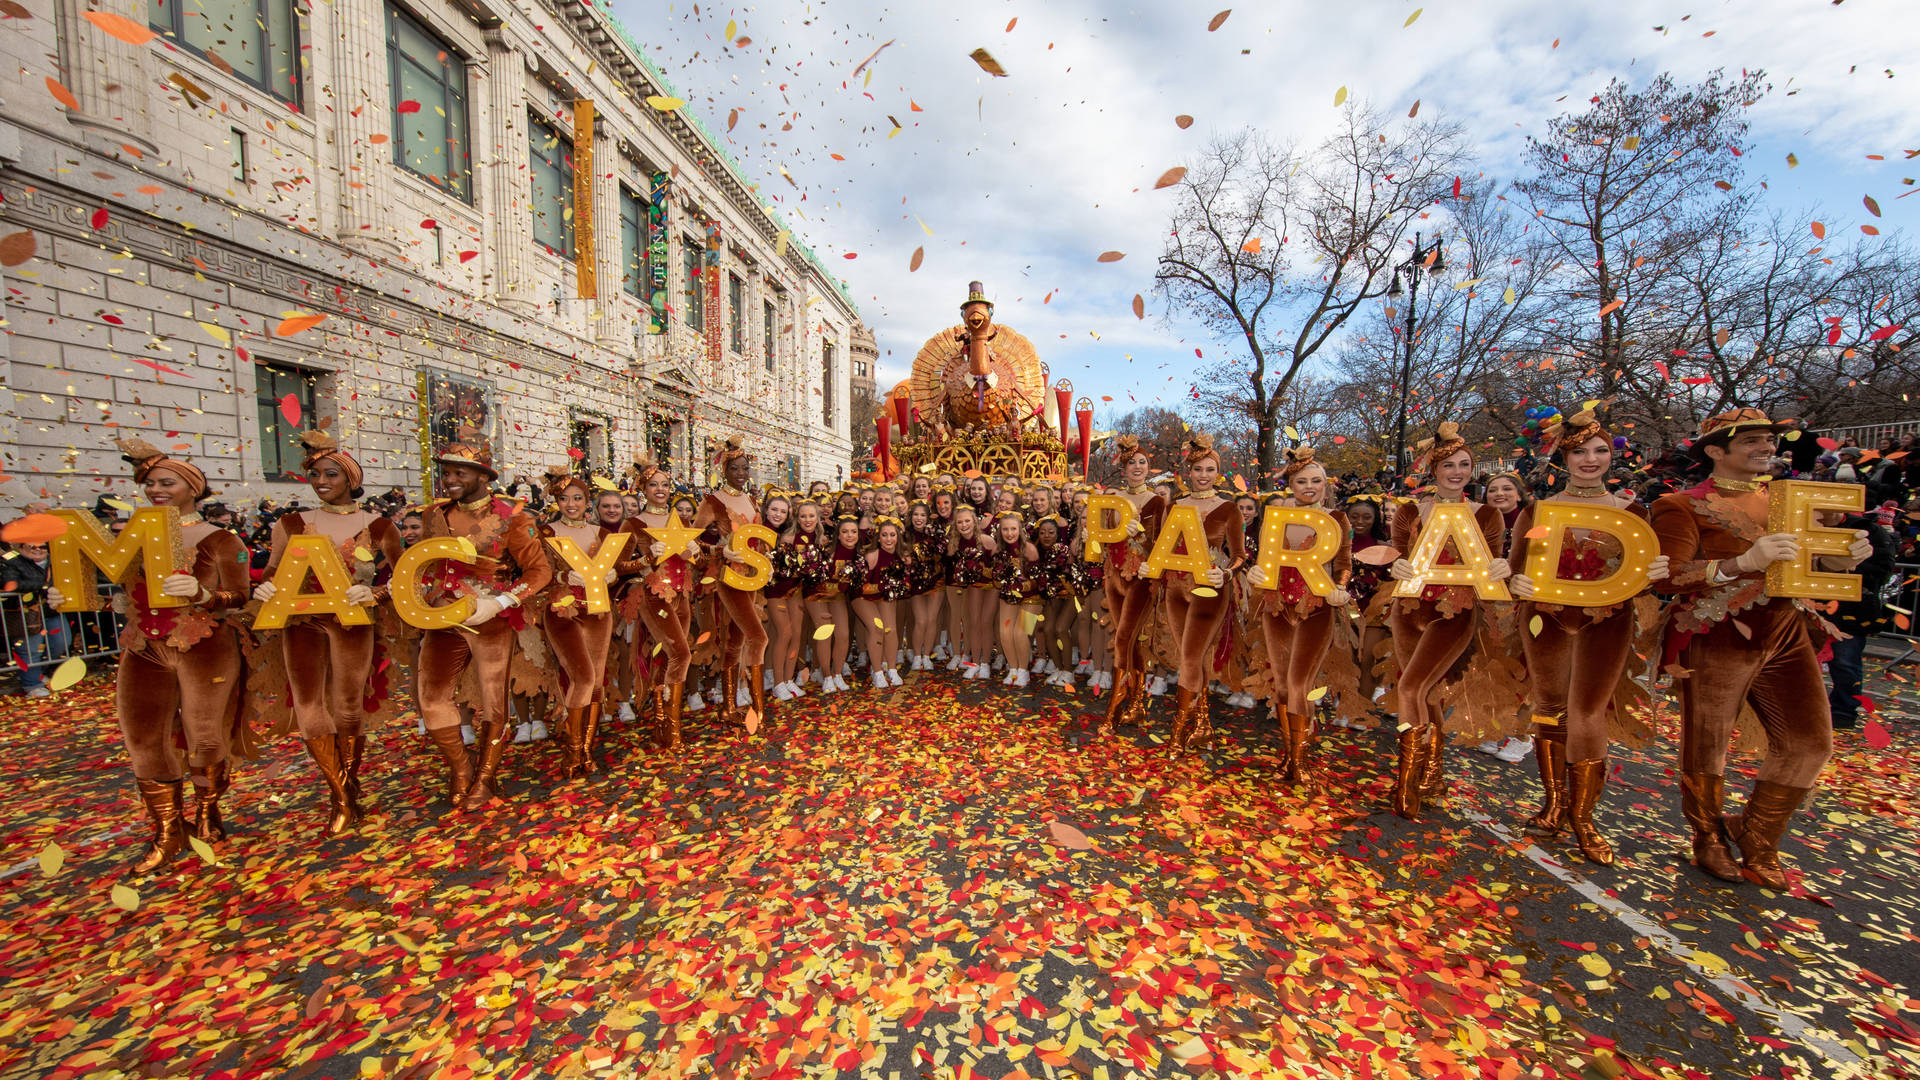 Macys Thanksgiving Parade Wallpaper